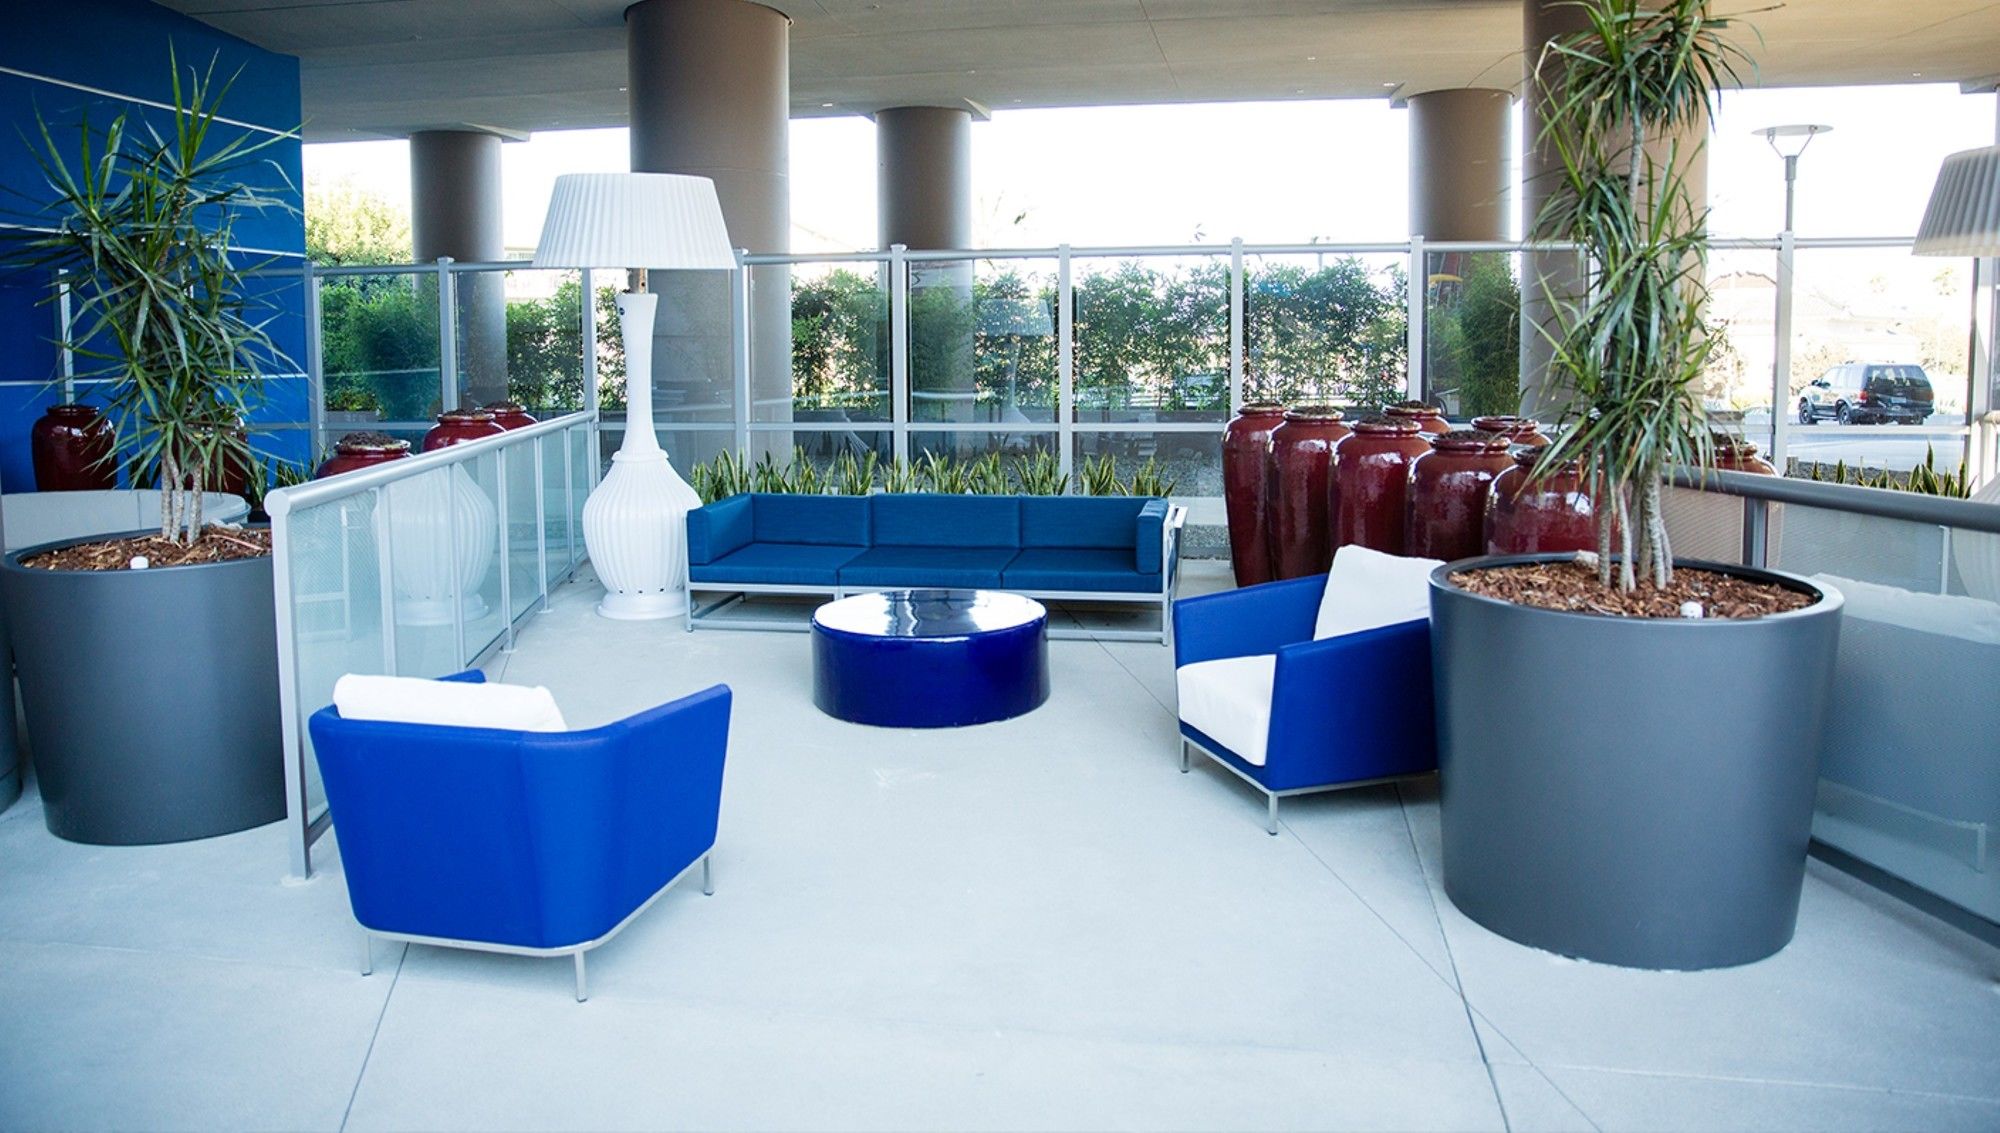 Global Luxury Suites at Marina Del Rey